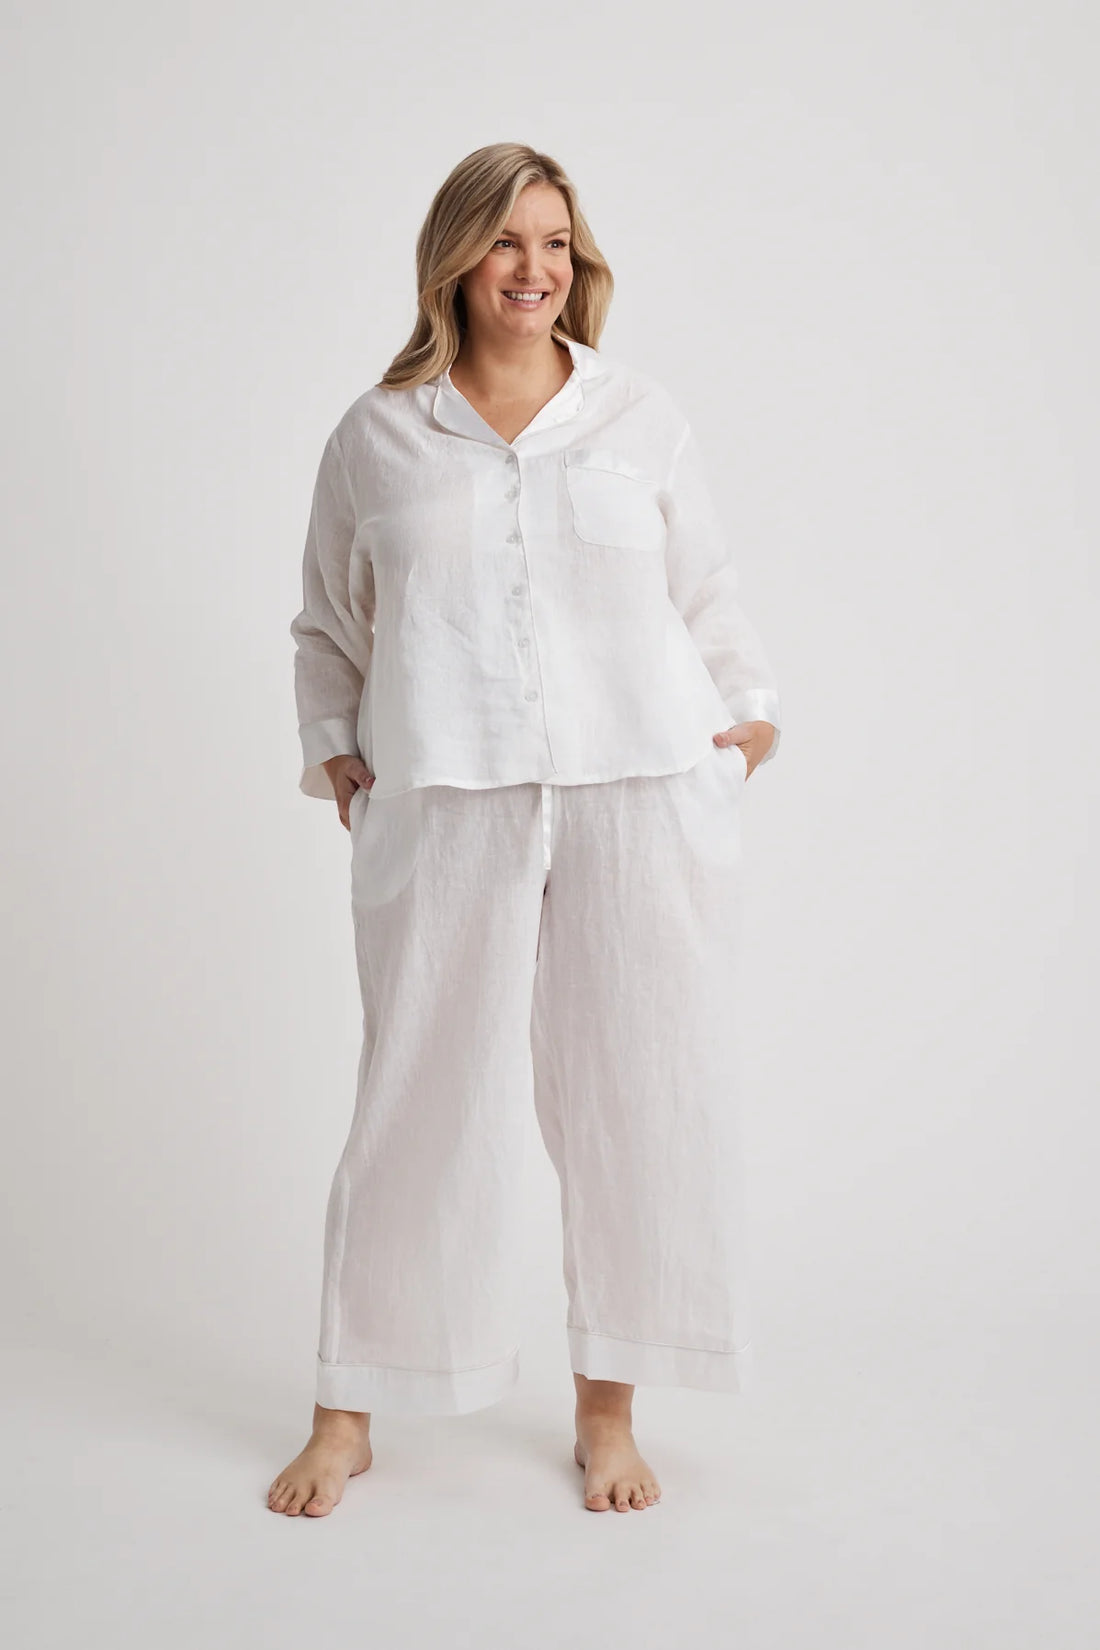 Sleepwear Comfort: Nightwear Choices for Women in Perimenopause and Menopause